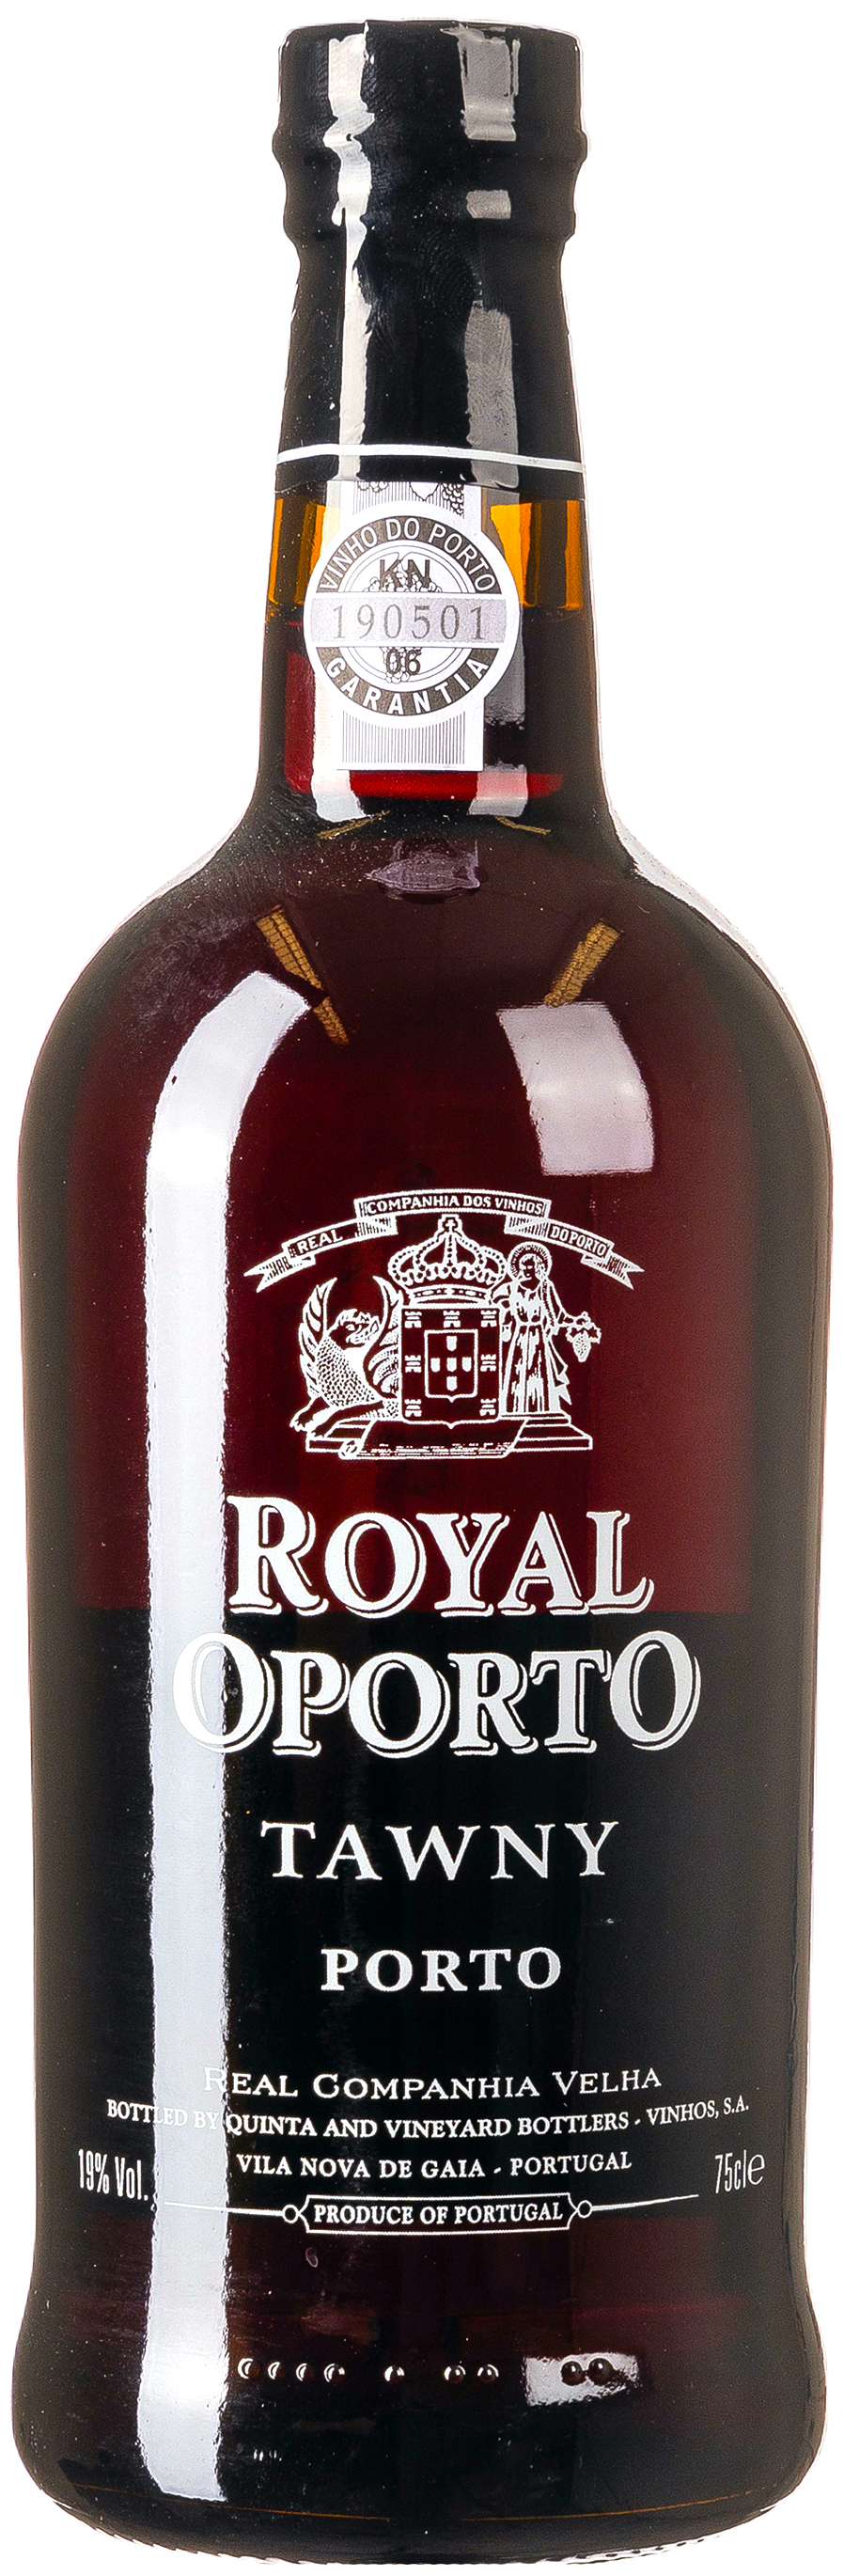 Royal Oporto Tawny Porto 19% vol. 0,75L 